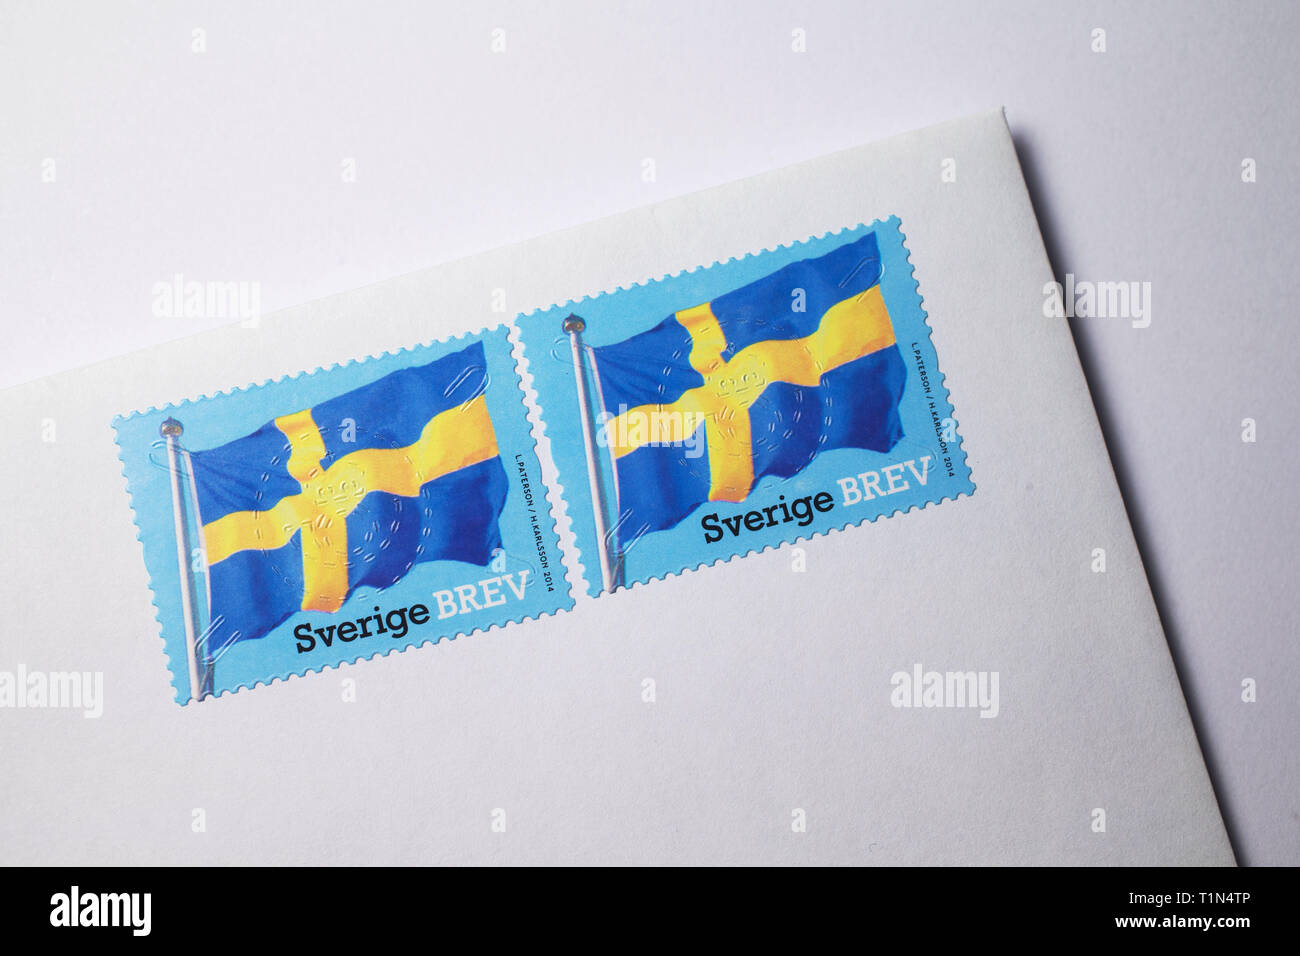 Sverige Brev Stock Photos & Sverige Brev Stock Images - Alamy